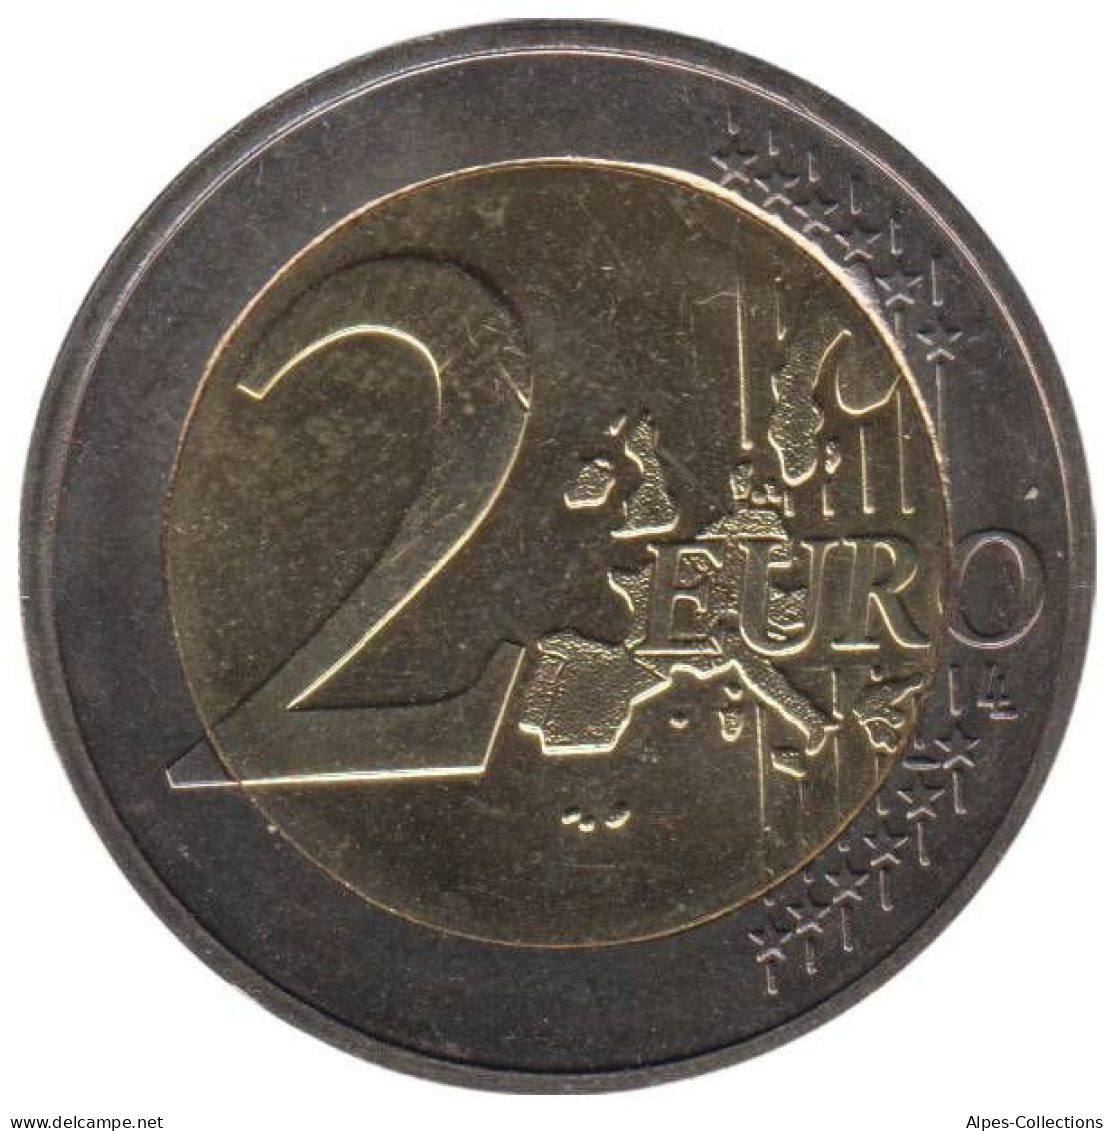 LU20003.1 - LUXEMBOURG - 2 Euros - 2003 - Luxembourg